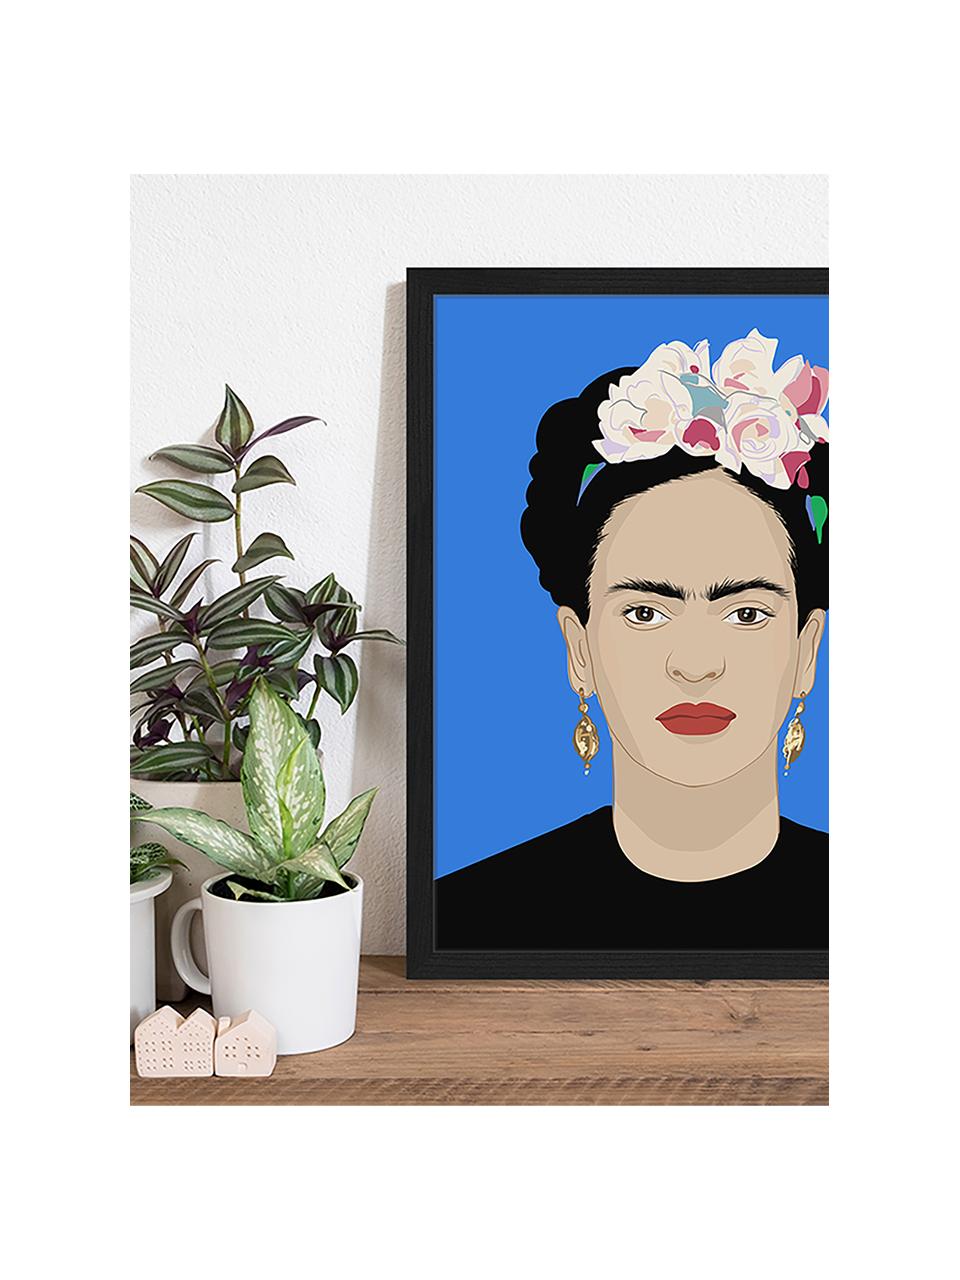 Gerahmter Digitaldruck Frida Kahlo, Bild: Digitaldruck auf Papier, , Rahmen: Holz, lackiert, Front: Plexiglas, Mehrfarbig, 43 x 53 cm